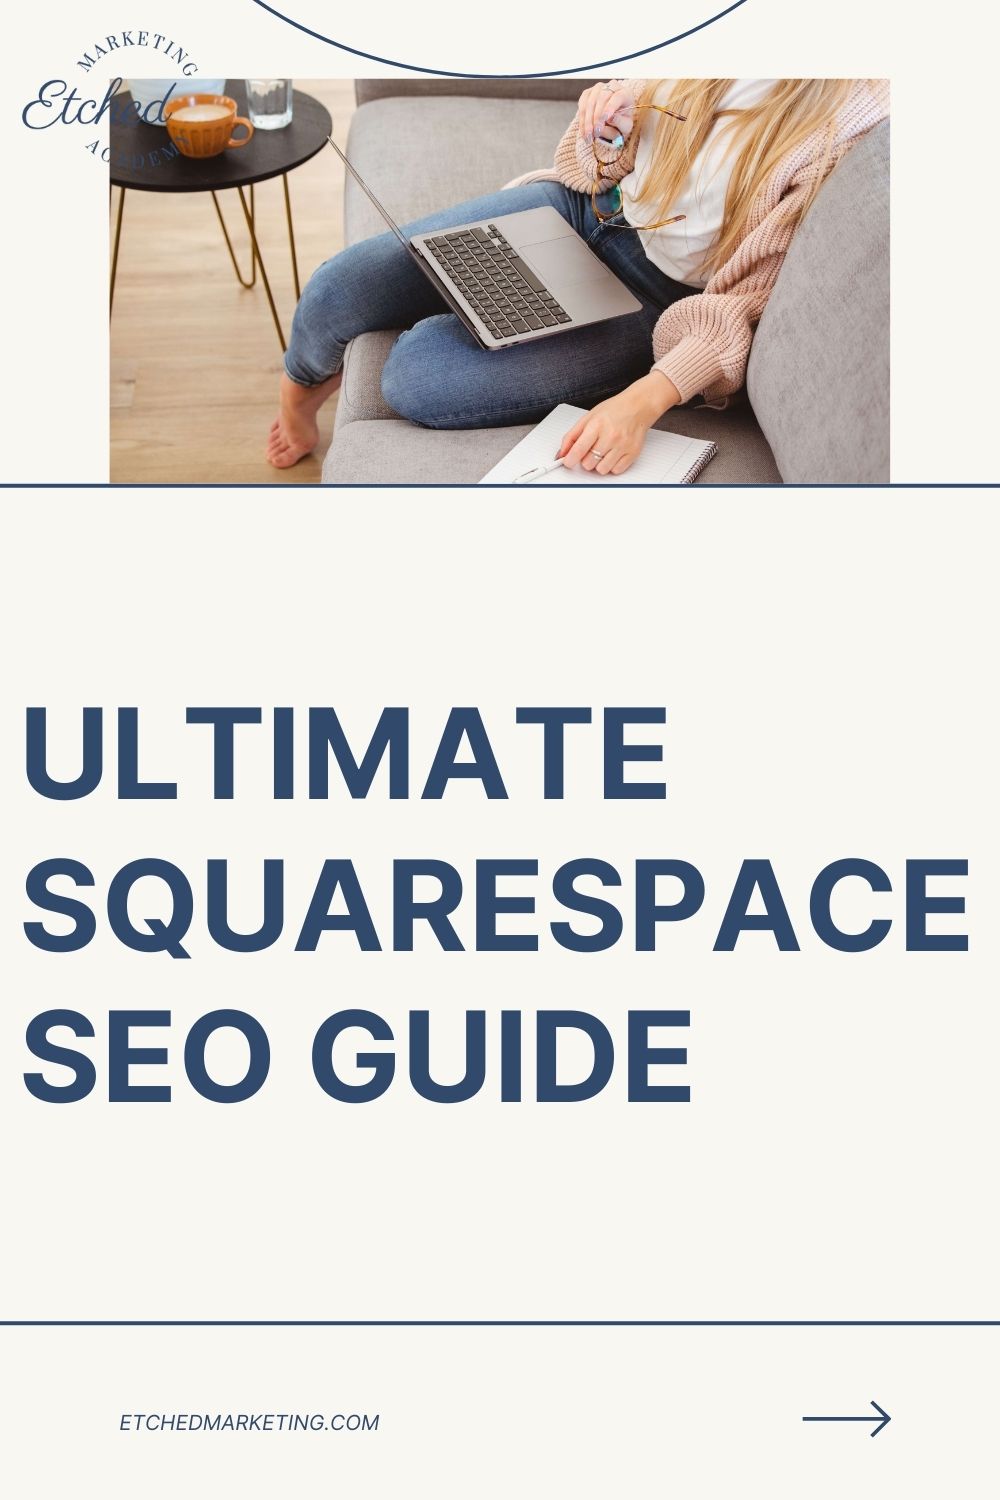 Squarespace SEO Guide